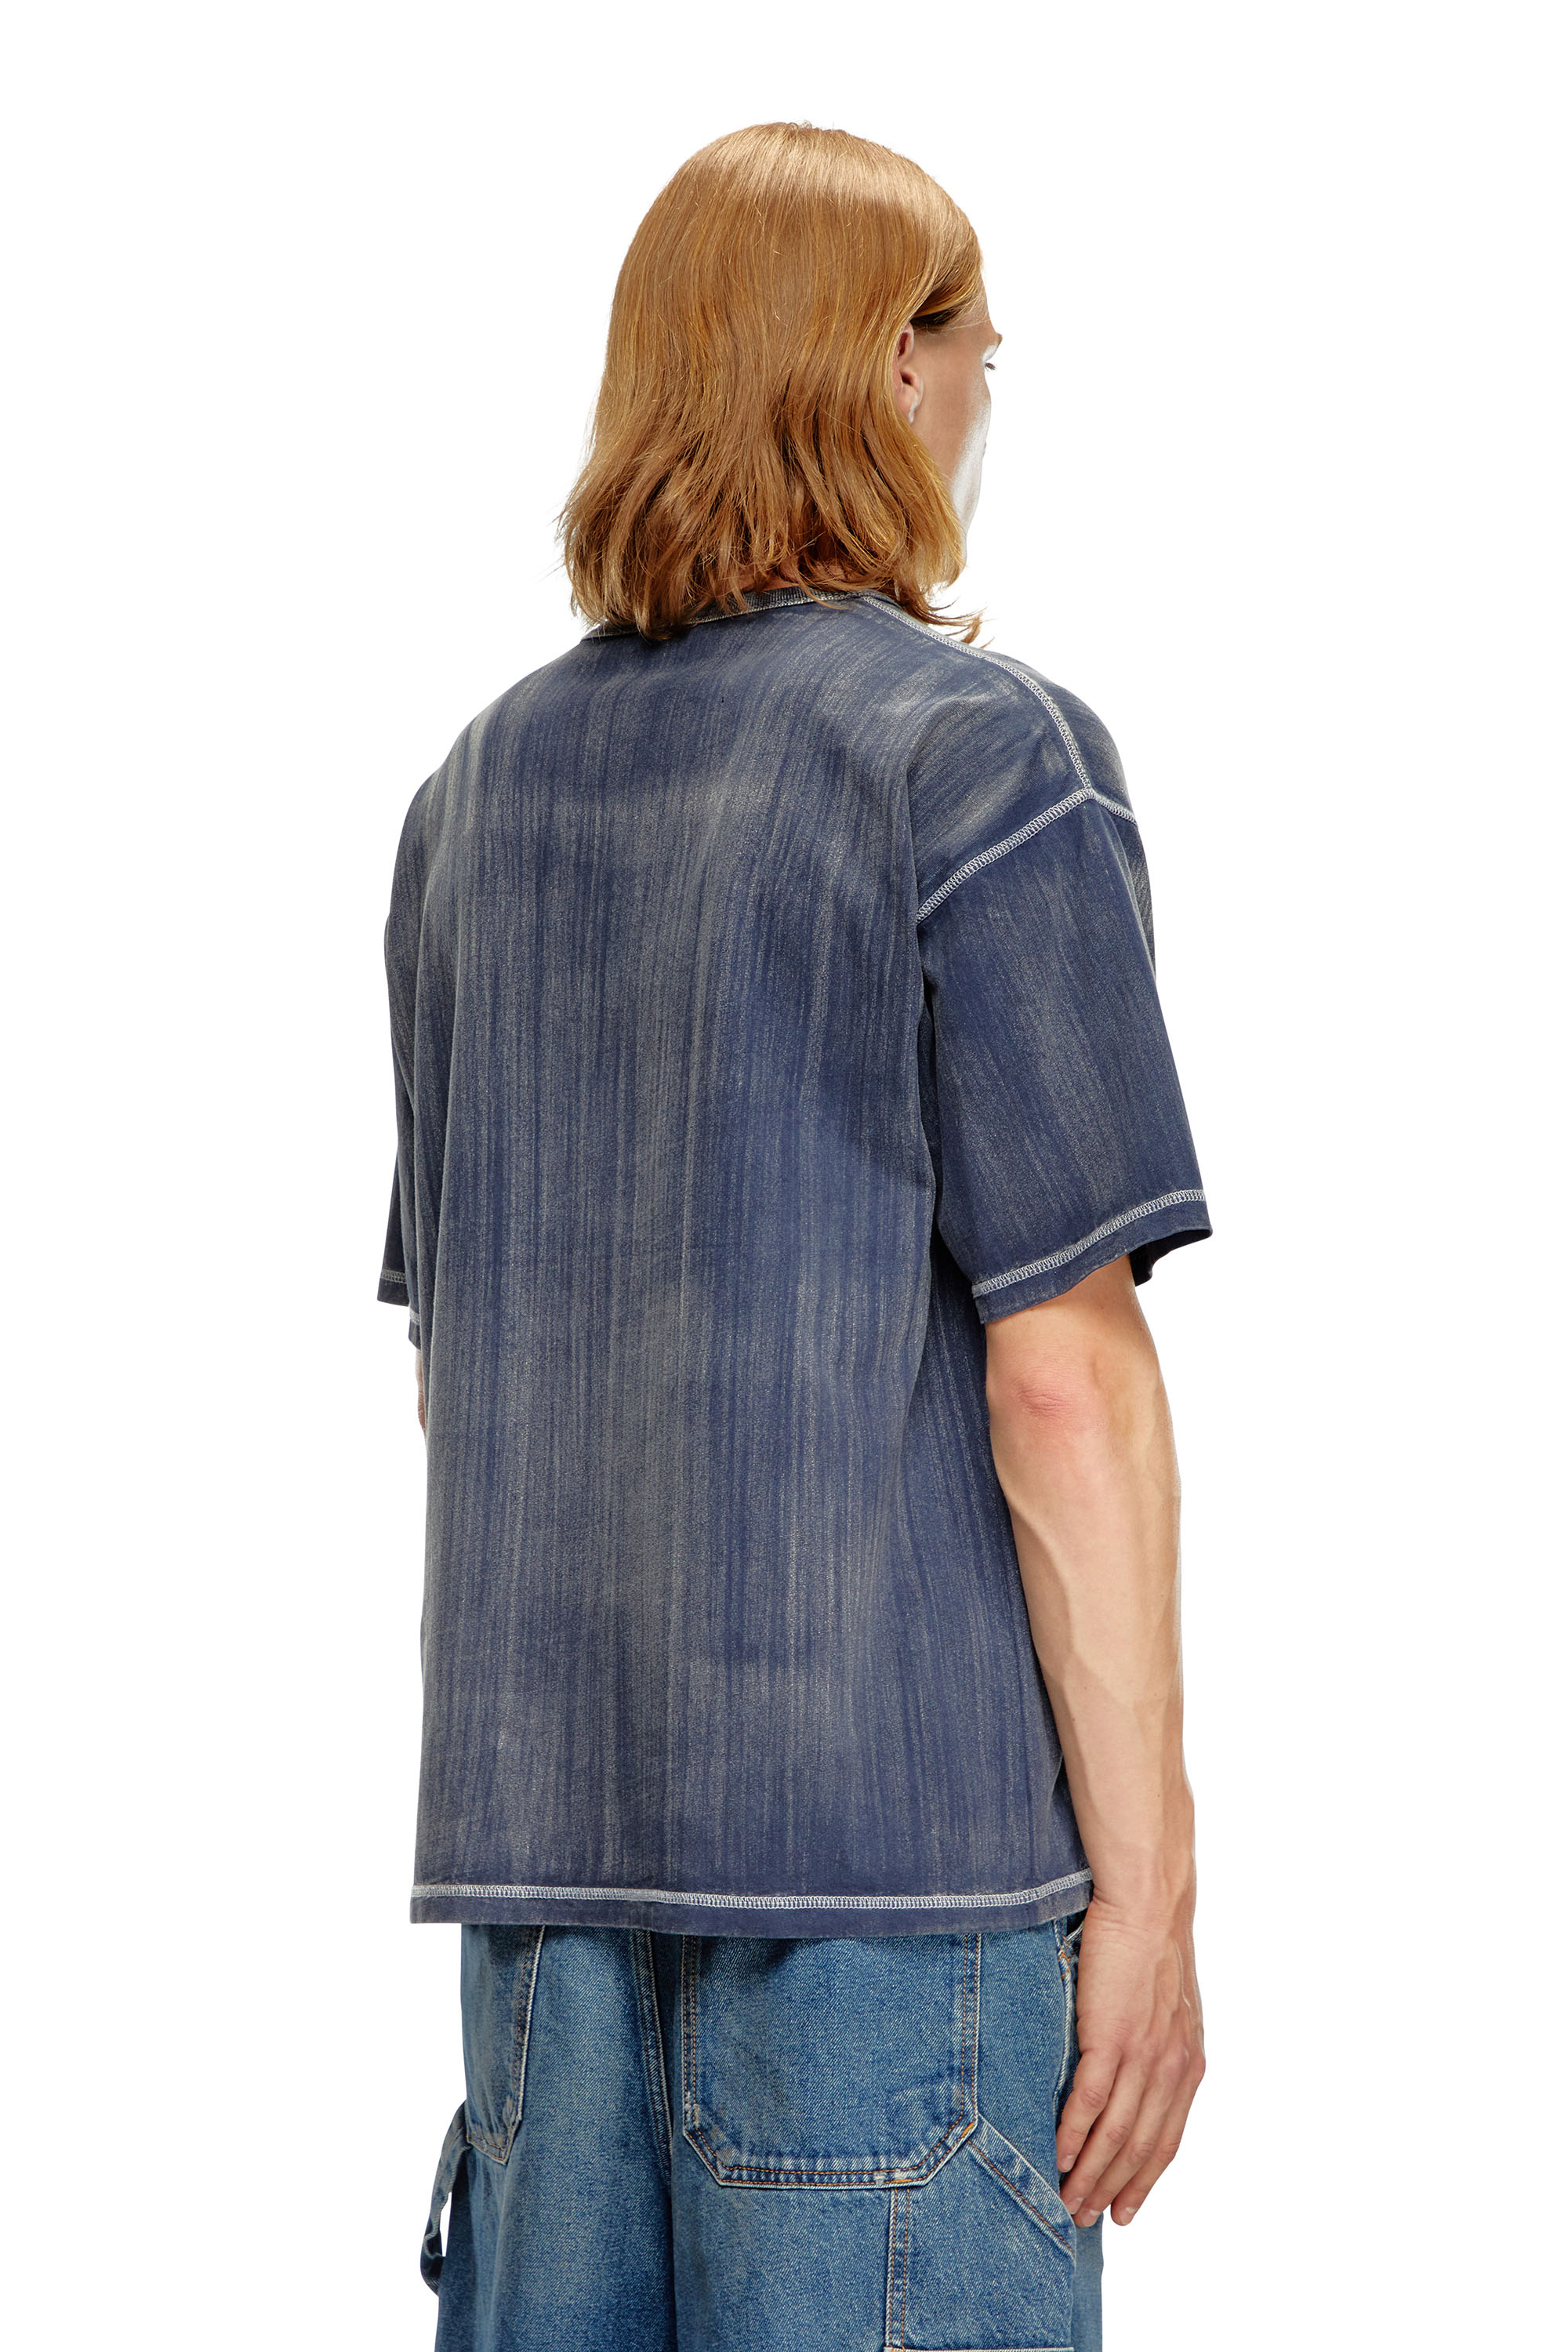 Diesel - T-BOXT-Q2, Hombre Camiseta tratada con logotipo en relieve in Azul marino - Image 4